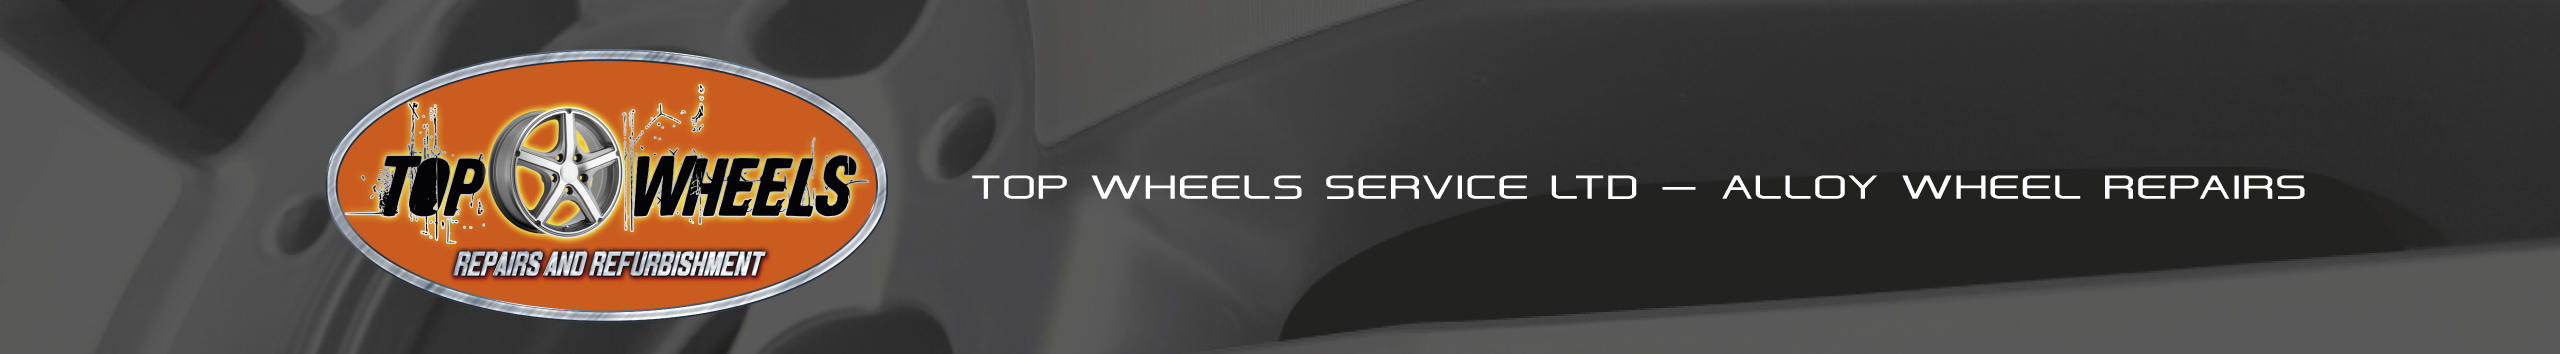 TOP WHEELS SERVICE LTD - Alloy Wheel Repairs